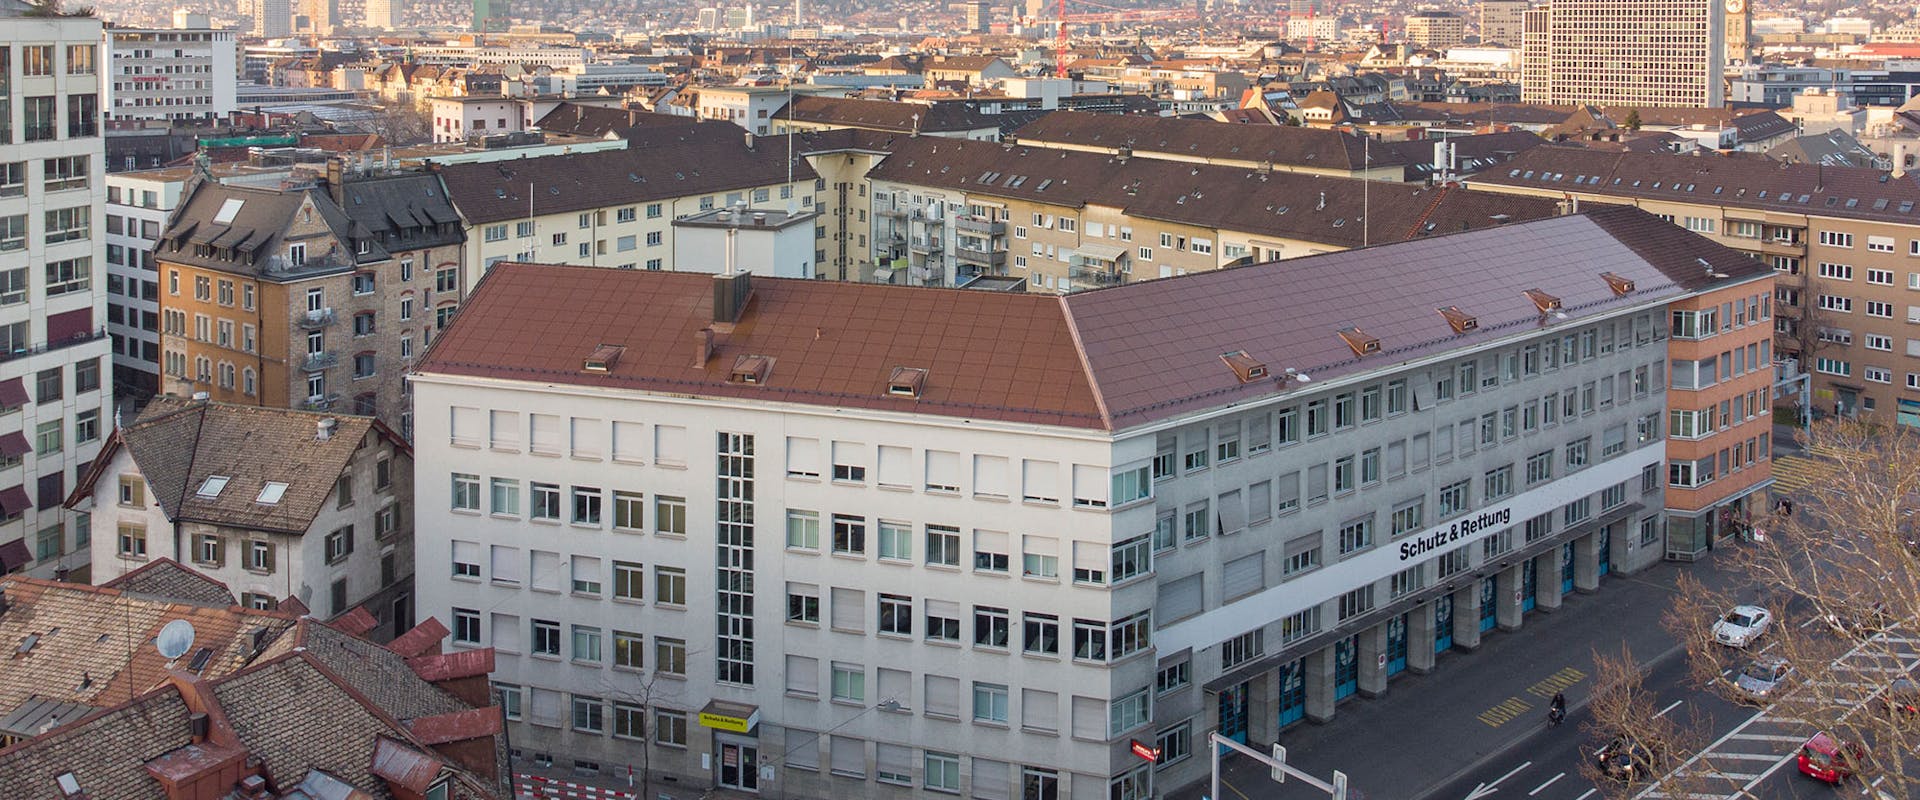 Building in Zürich with CSEM solar panels